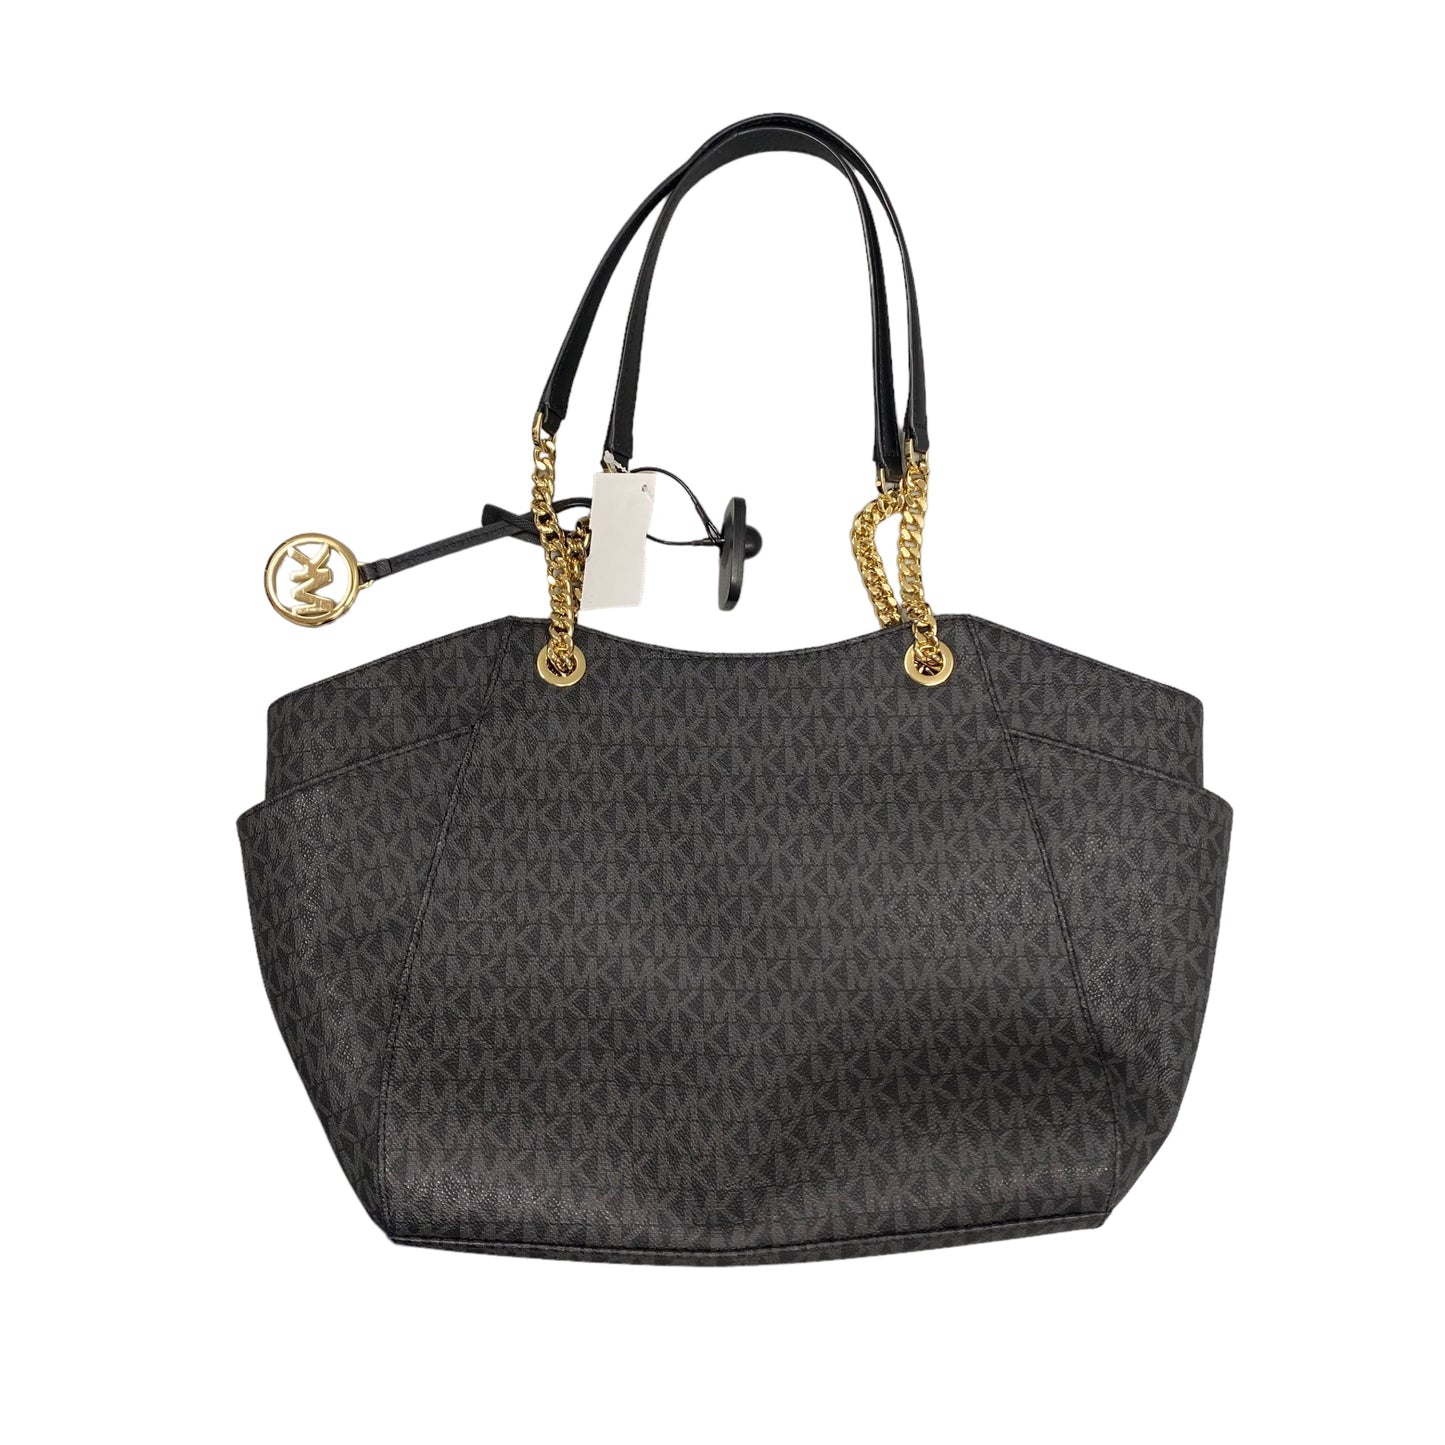 Grey Handbag Designer Michael Kors, Size Large